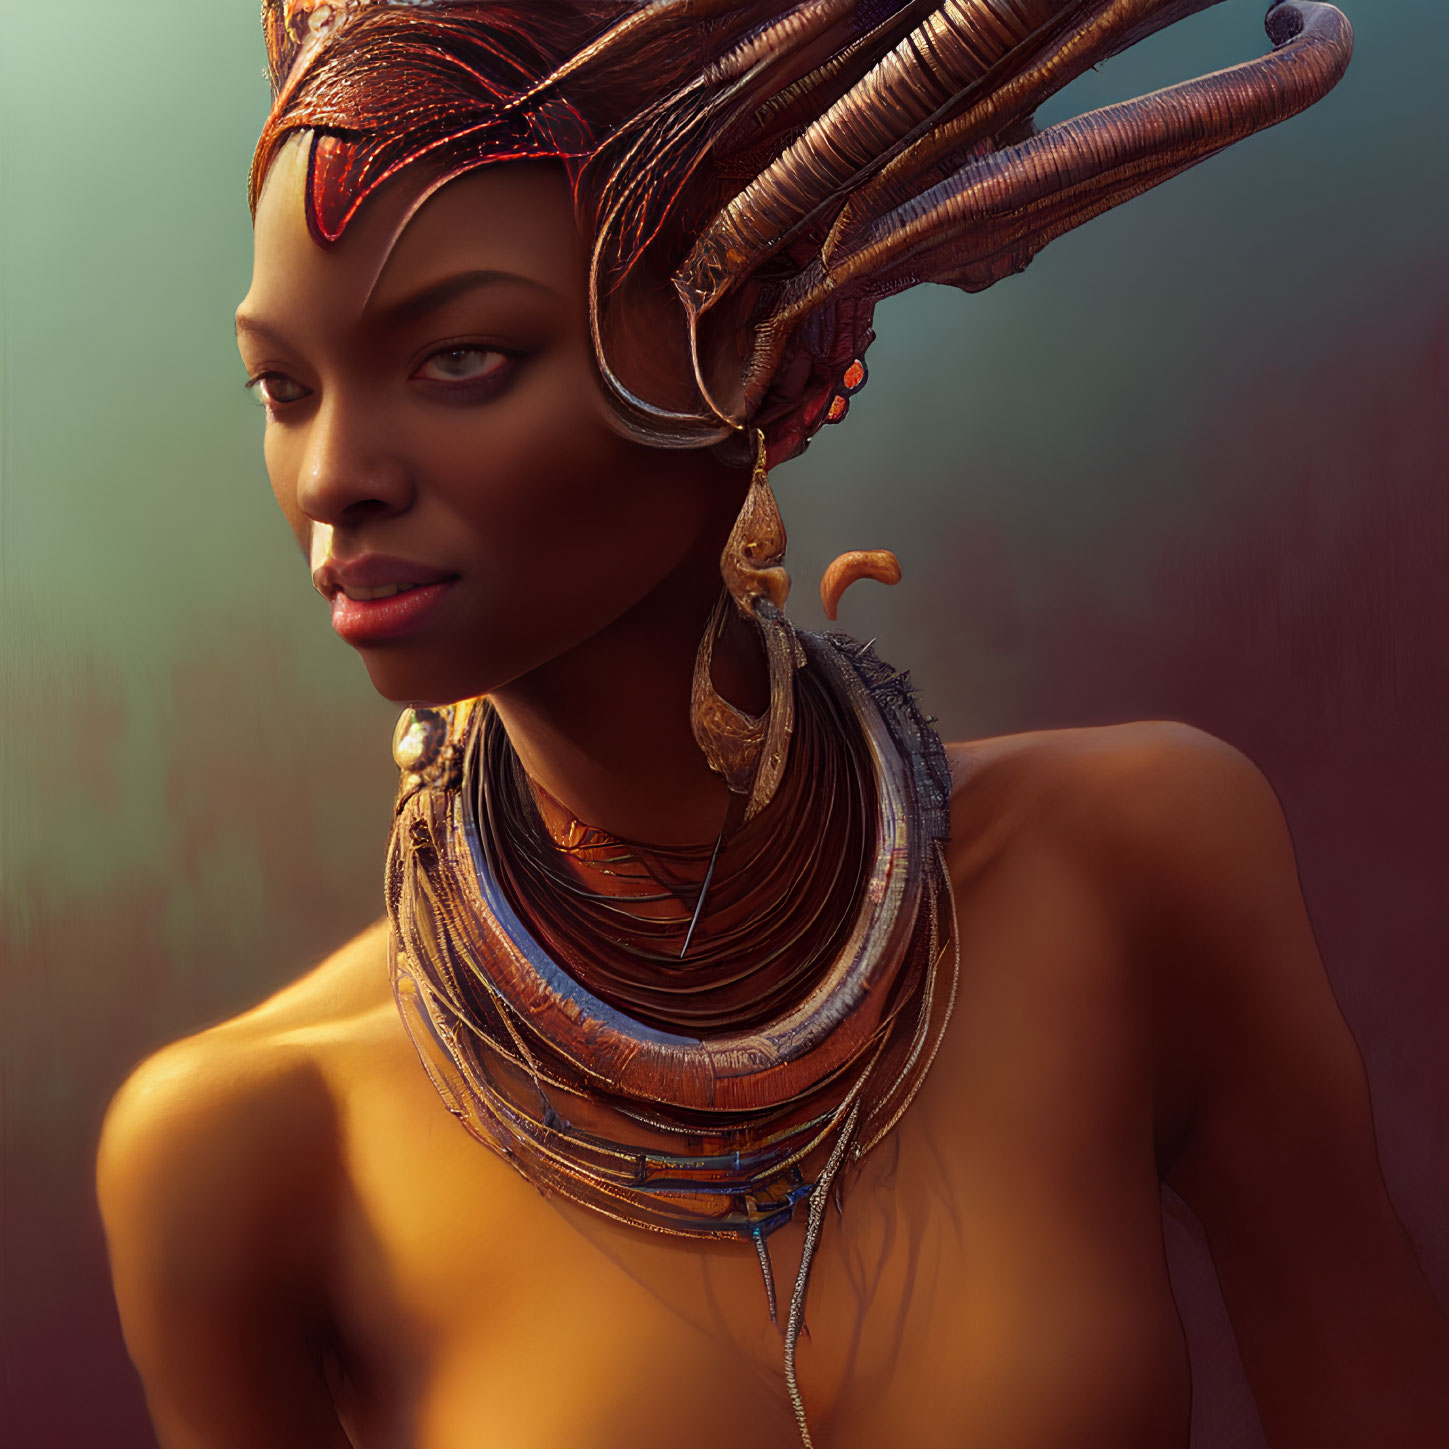 Digital Artwork: Woman with Elaborate Horned Headdress